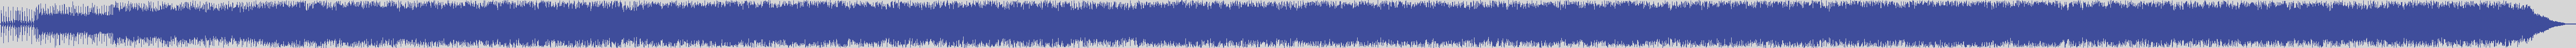 upr [UPR074] Container 47 - Synapse Wonder Wood [Original Mix] audio wave form